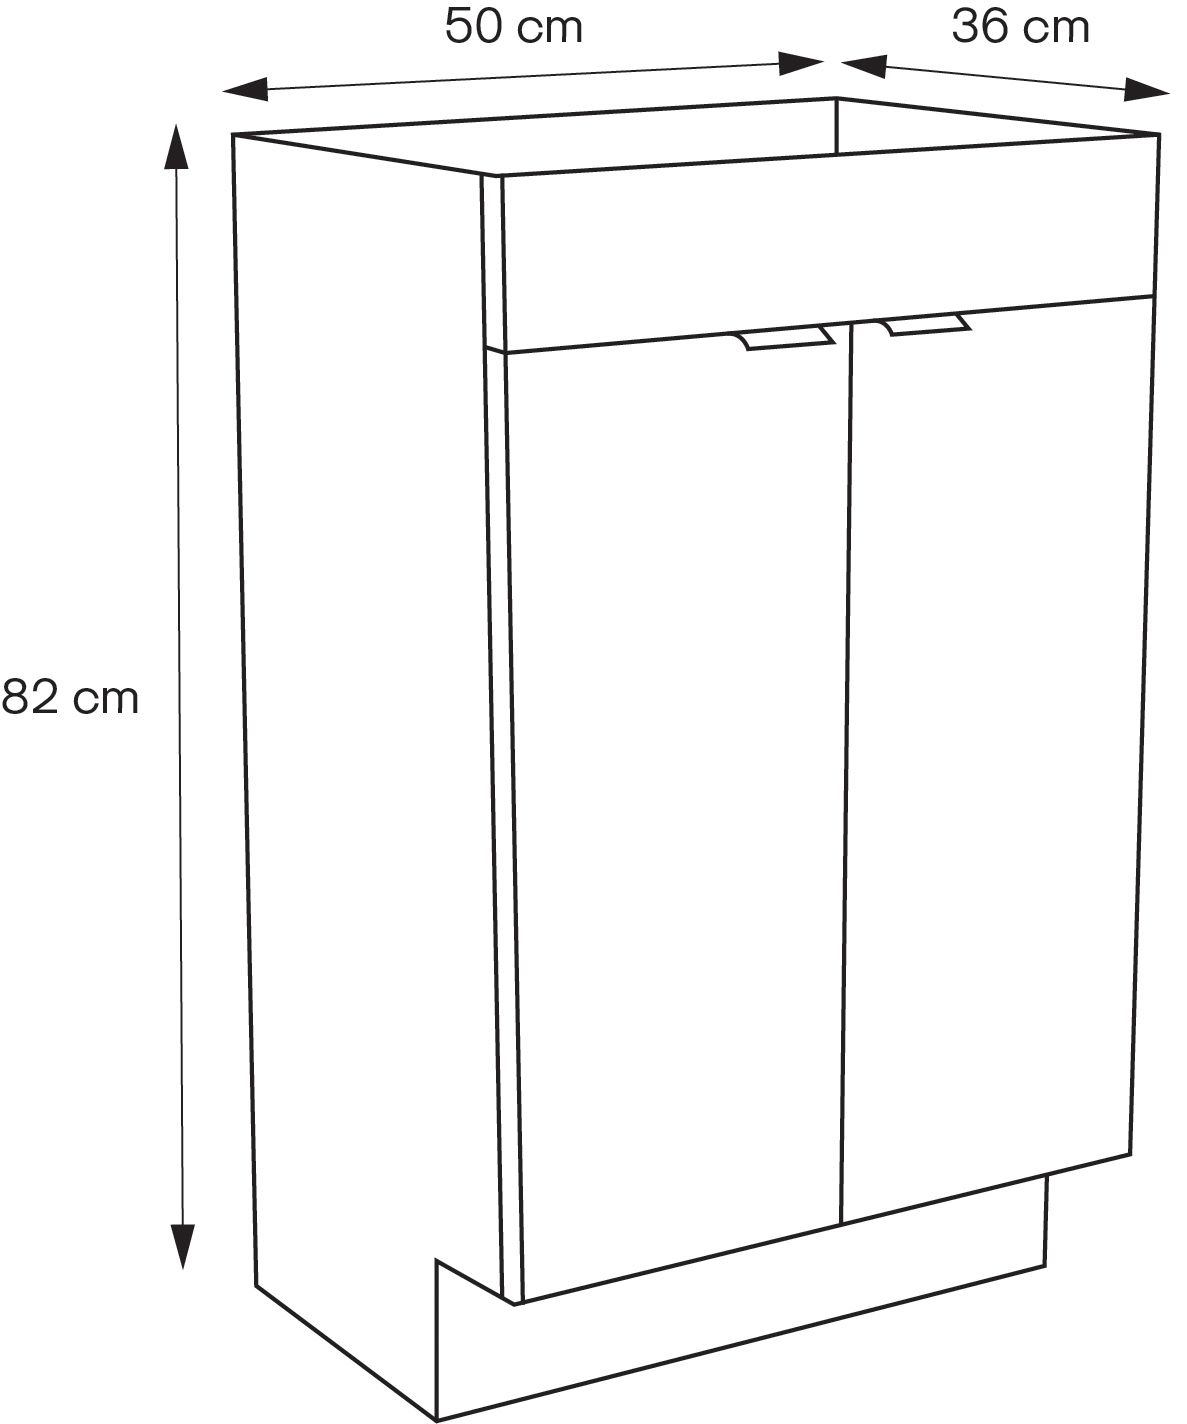 GoodHome Imandra Slimline Gloss Grey Double Bathroom Cabinet (H) 820mm (W) 500mm